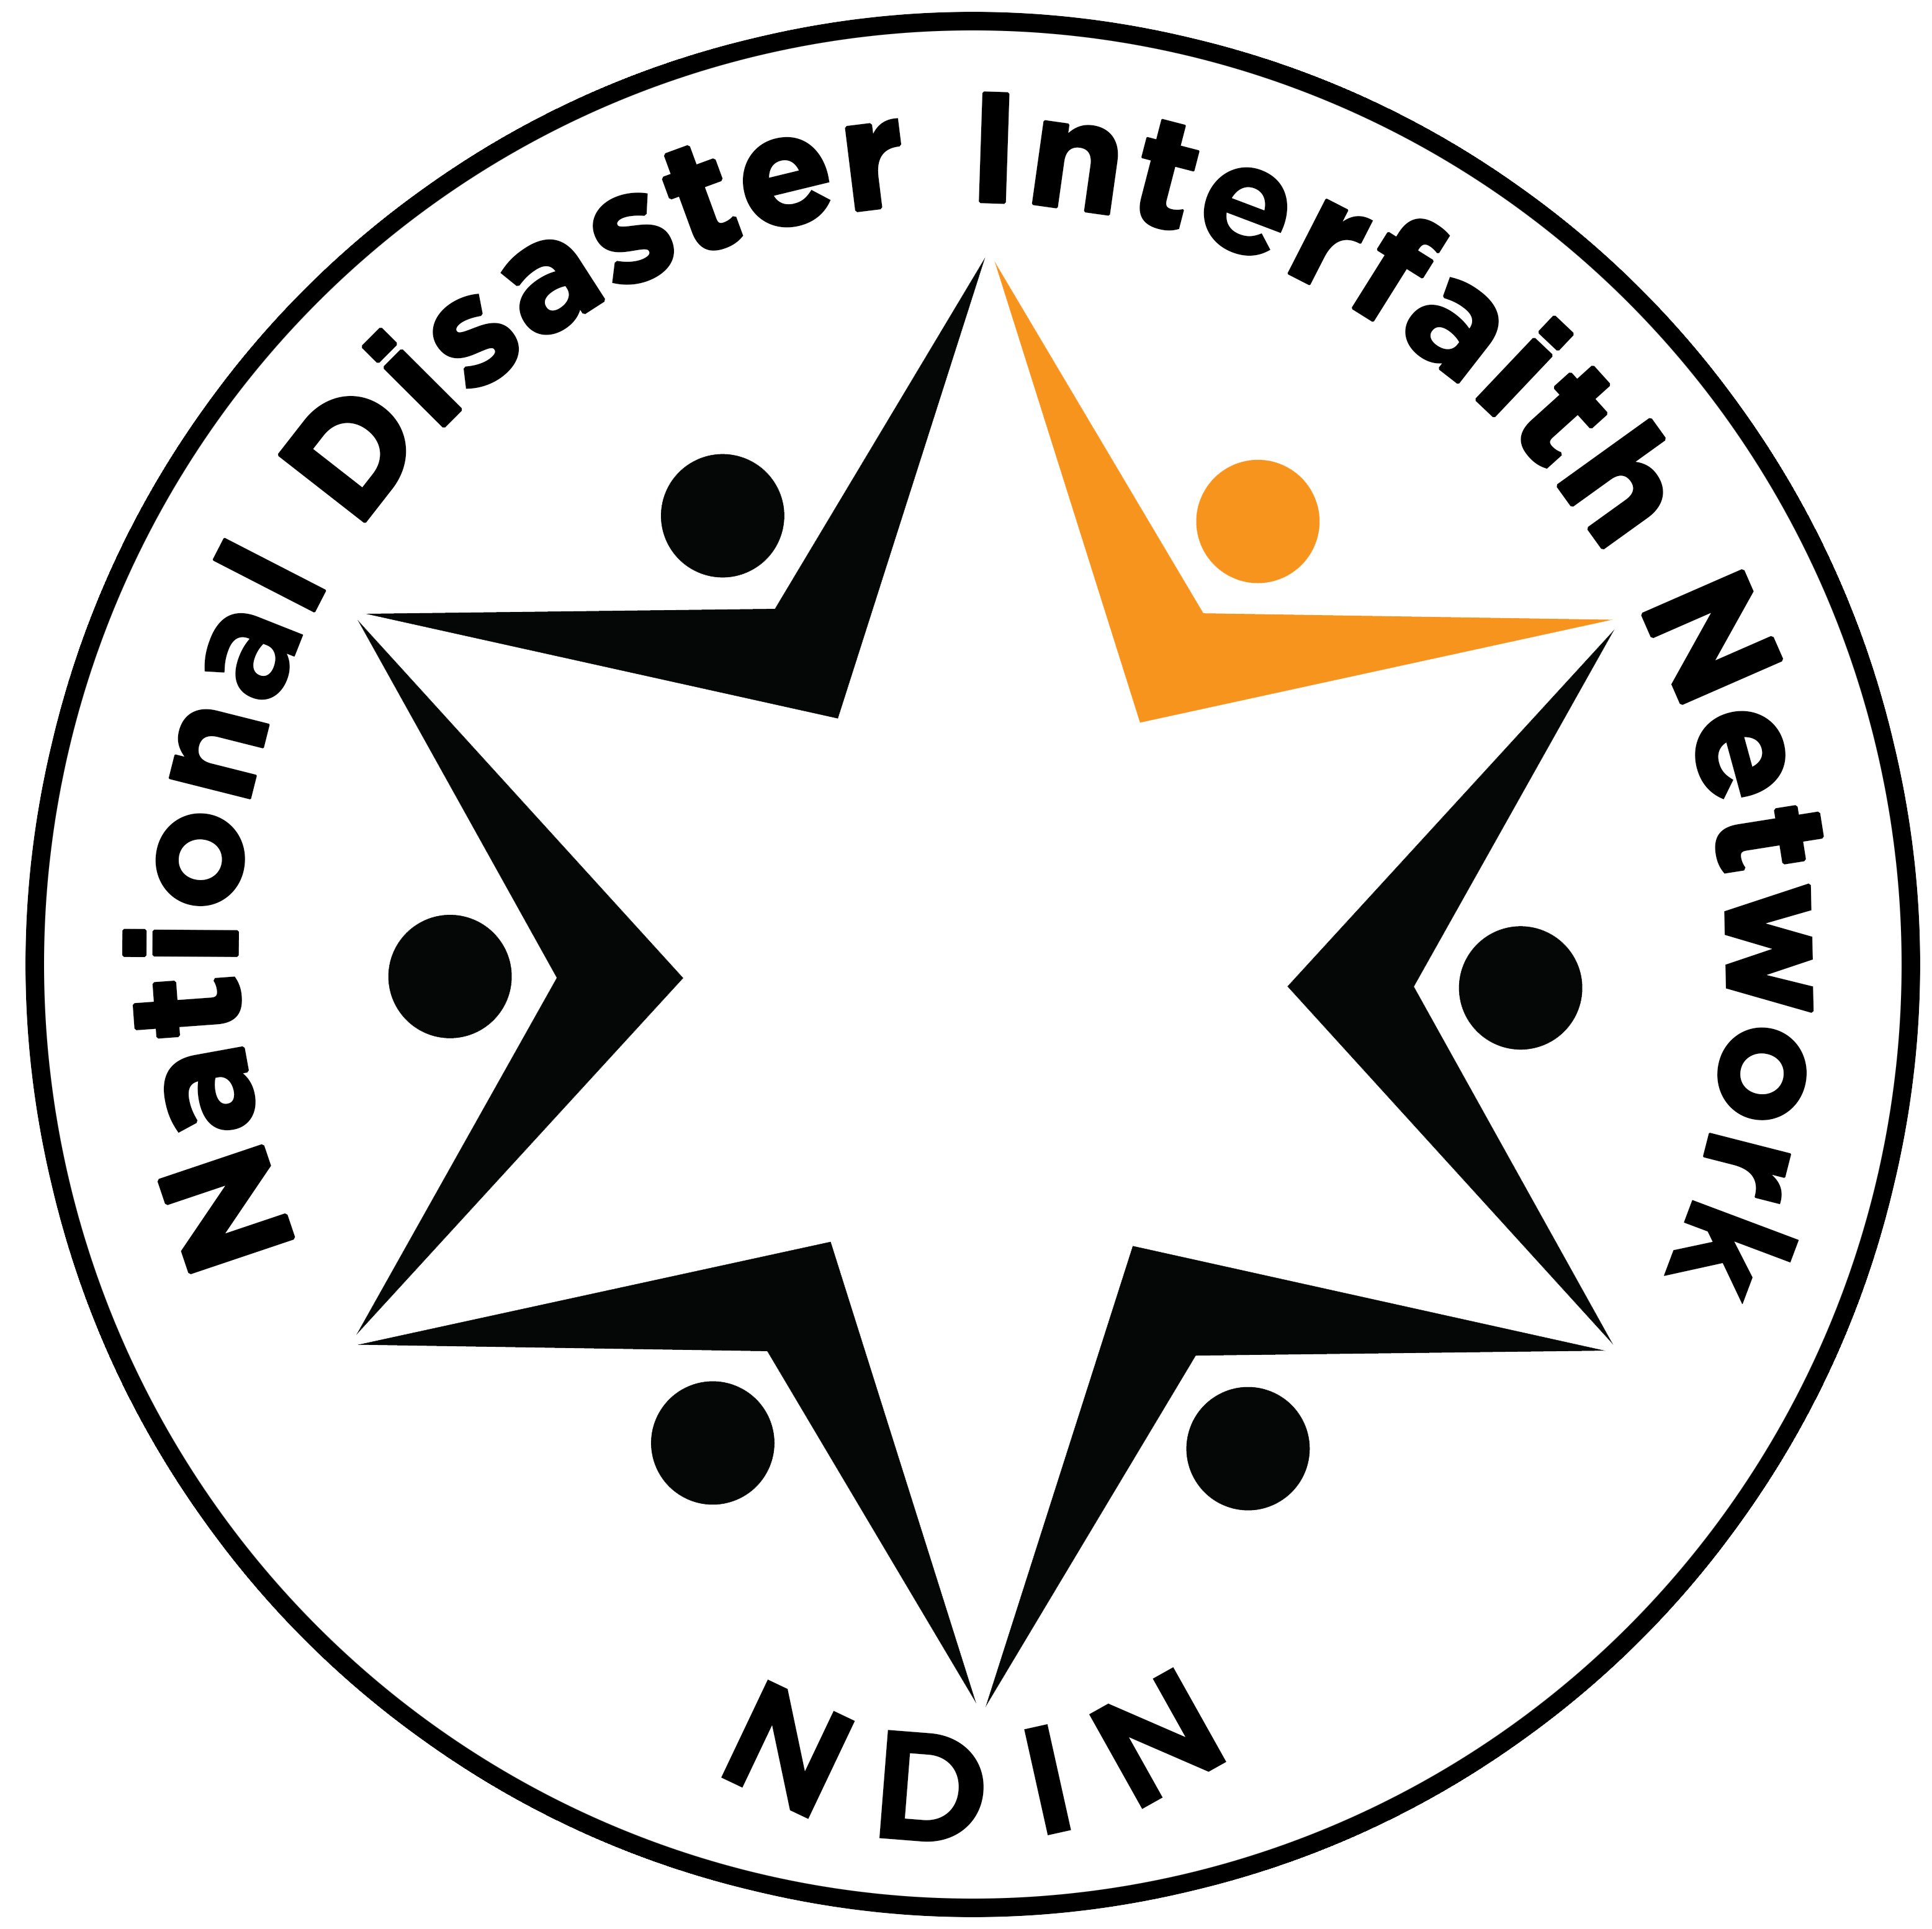 National Disaster Interfaiths Network - 